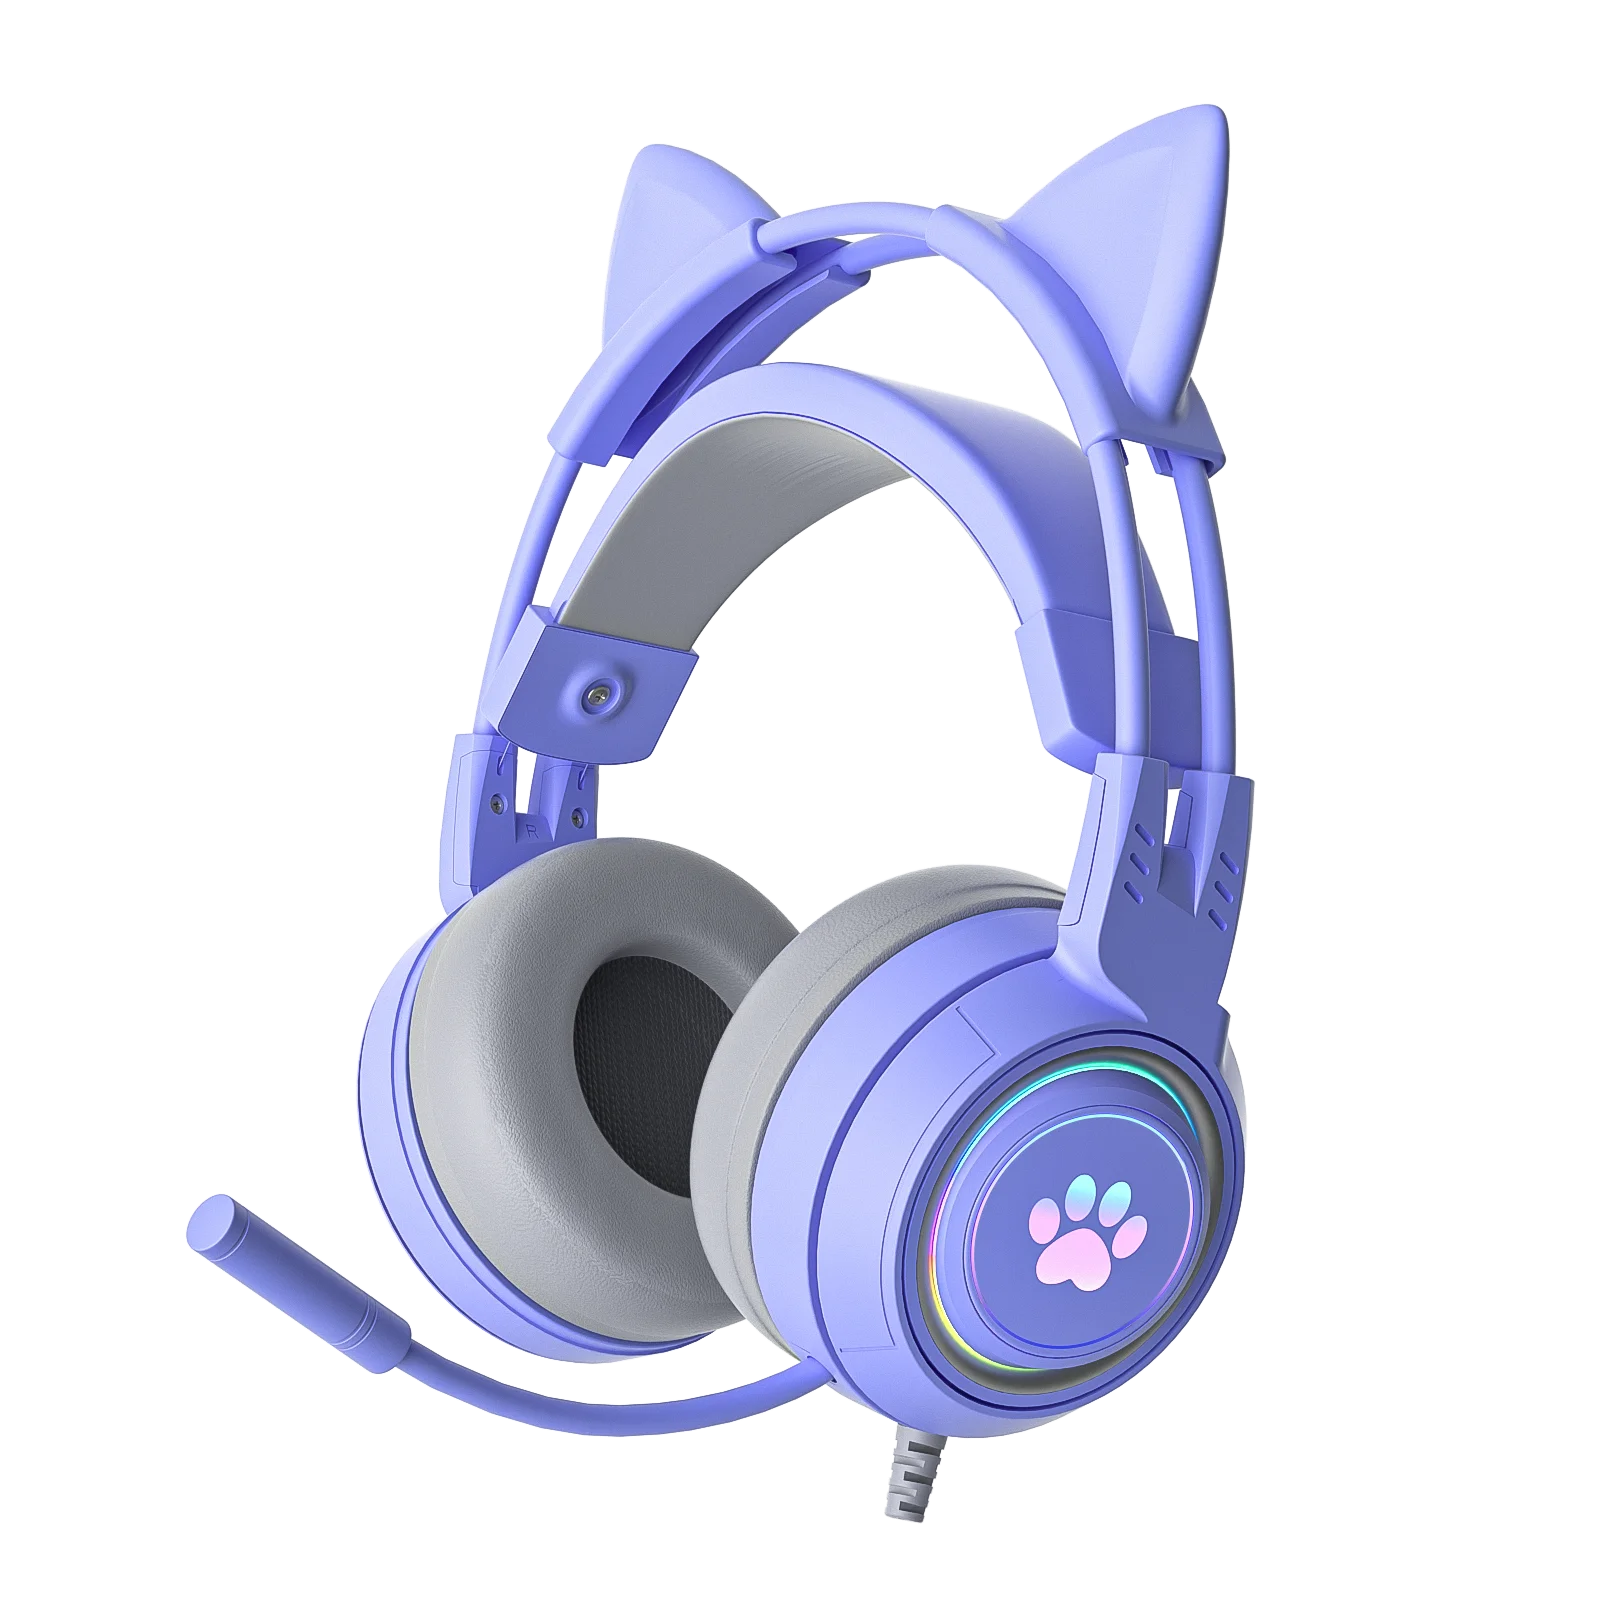 Купи Cat Ear Gaming Headset Gamer With Microphone Headphones for Computer With RGB Light For PC PS4/5 XBOX Laptop за 1,238 рублей в магазине AliExpress